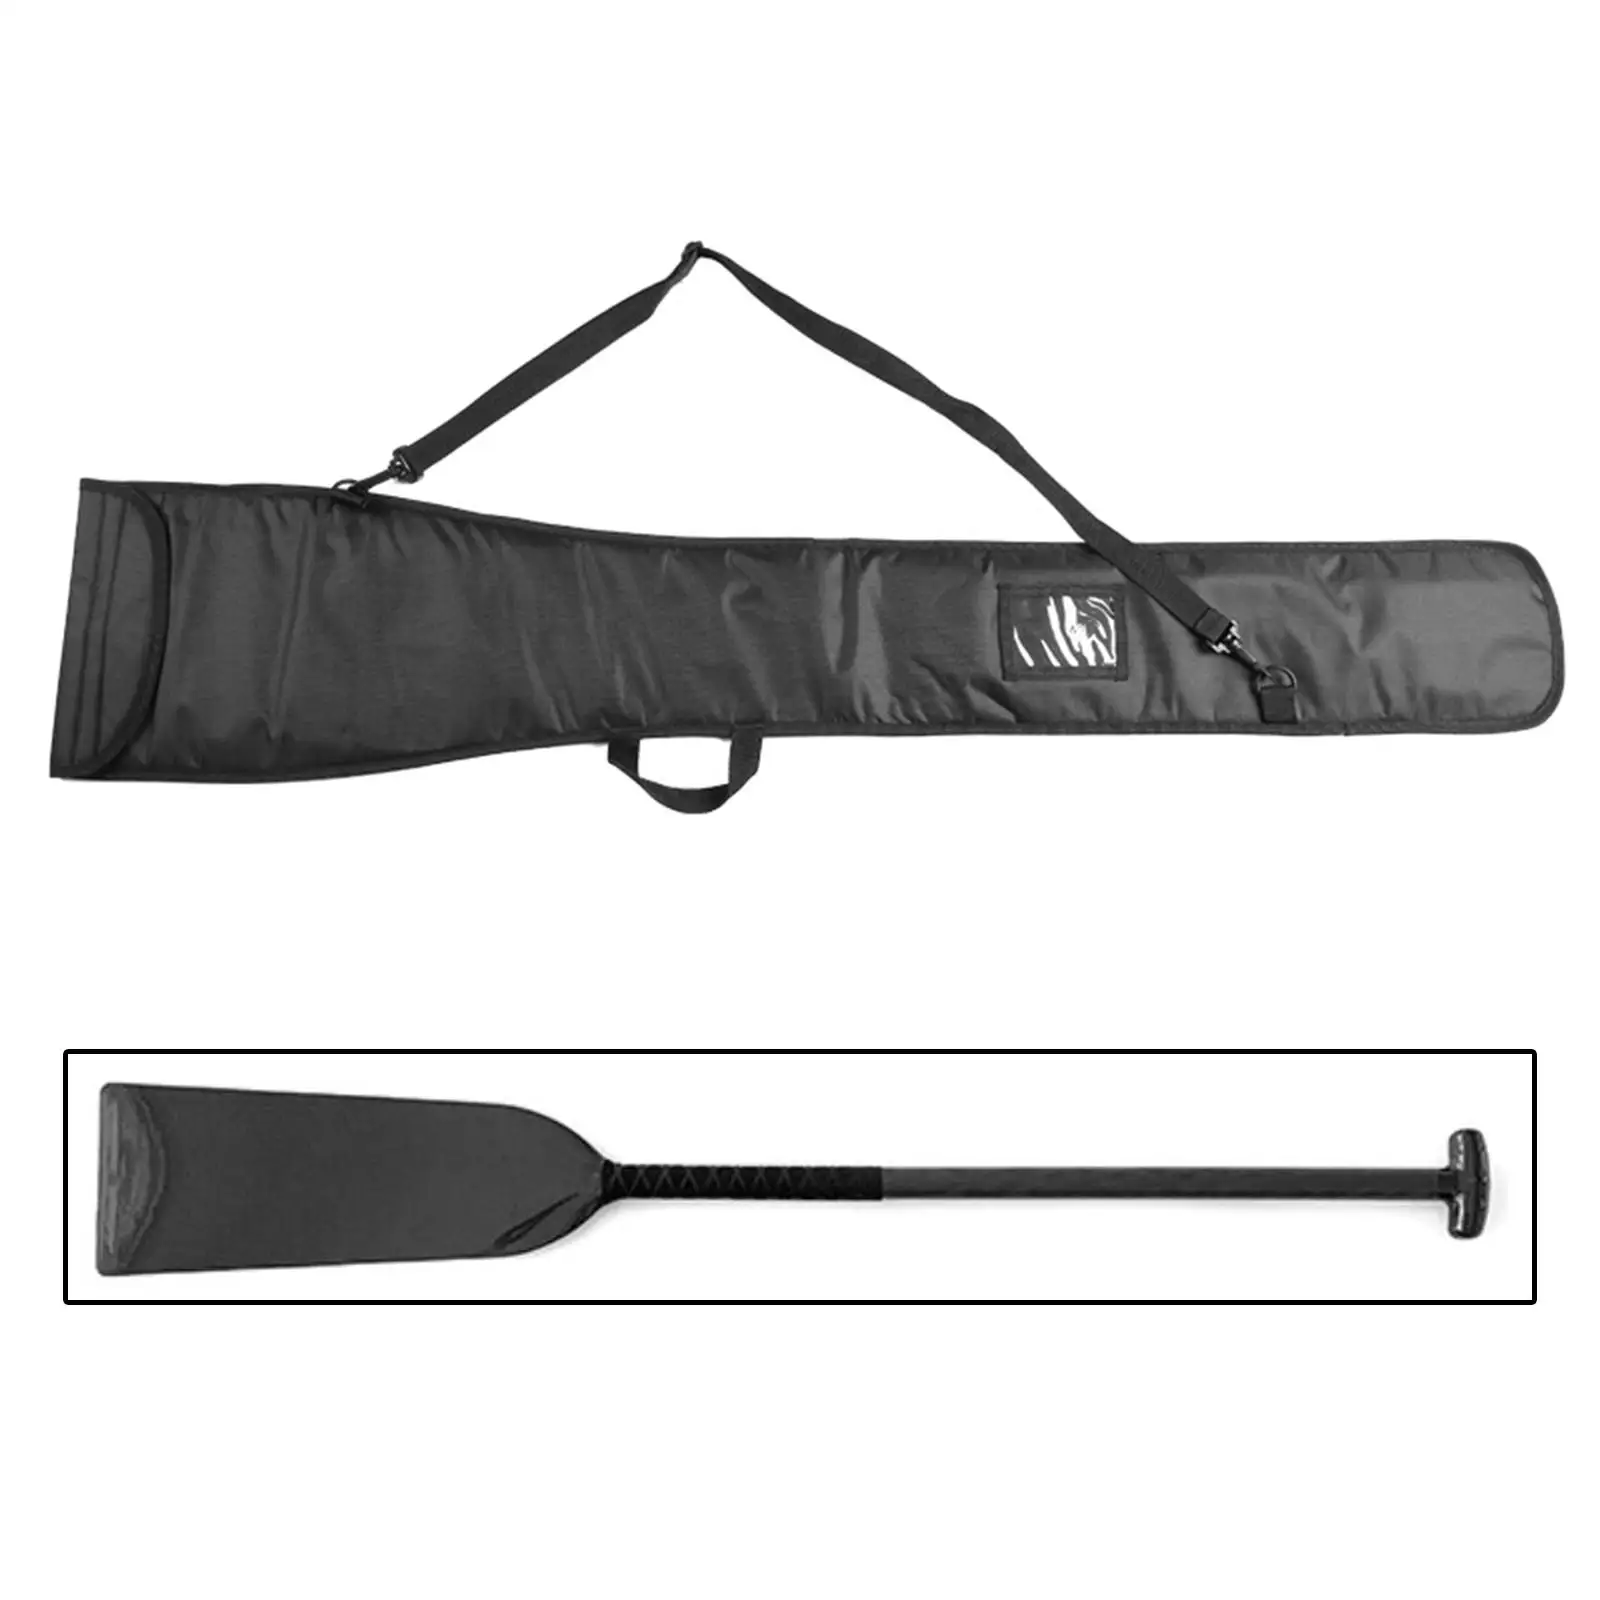  Bag Split Shaft Canoe Paddles Bag Durable Storage Carry Multiple Paddles